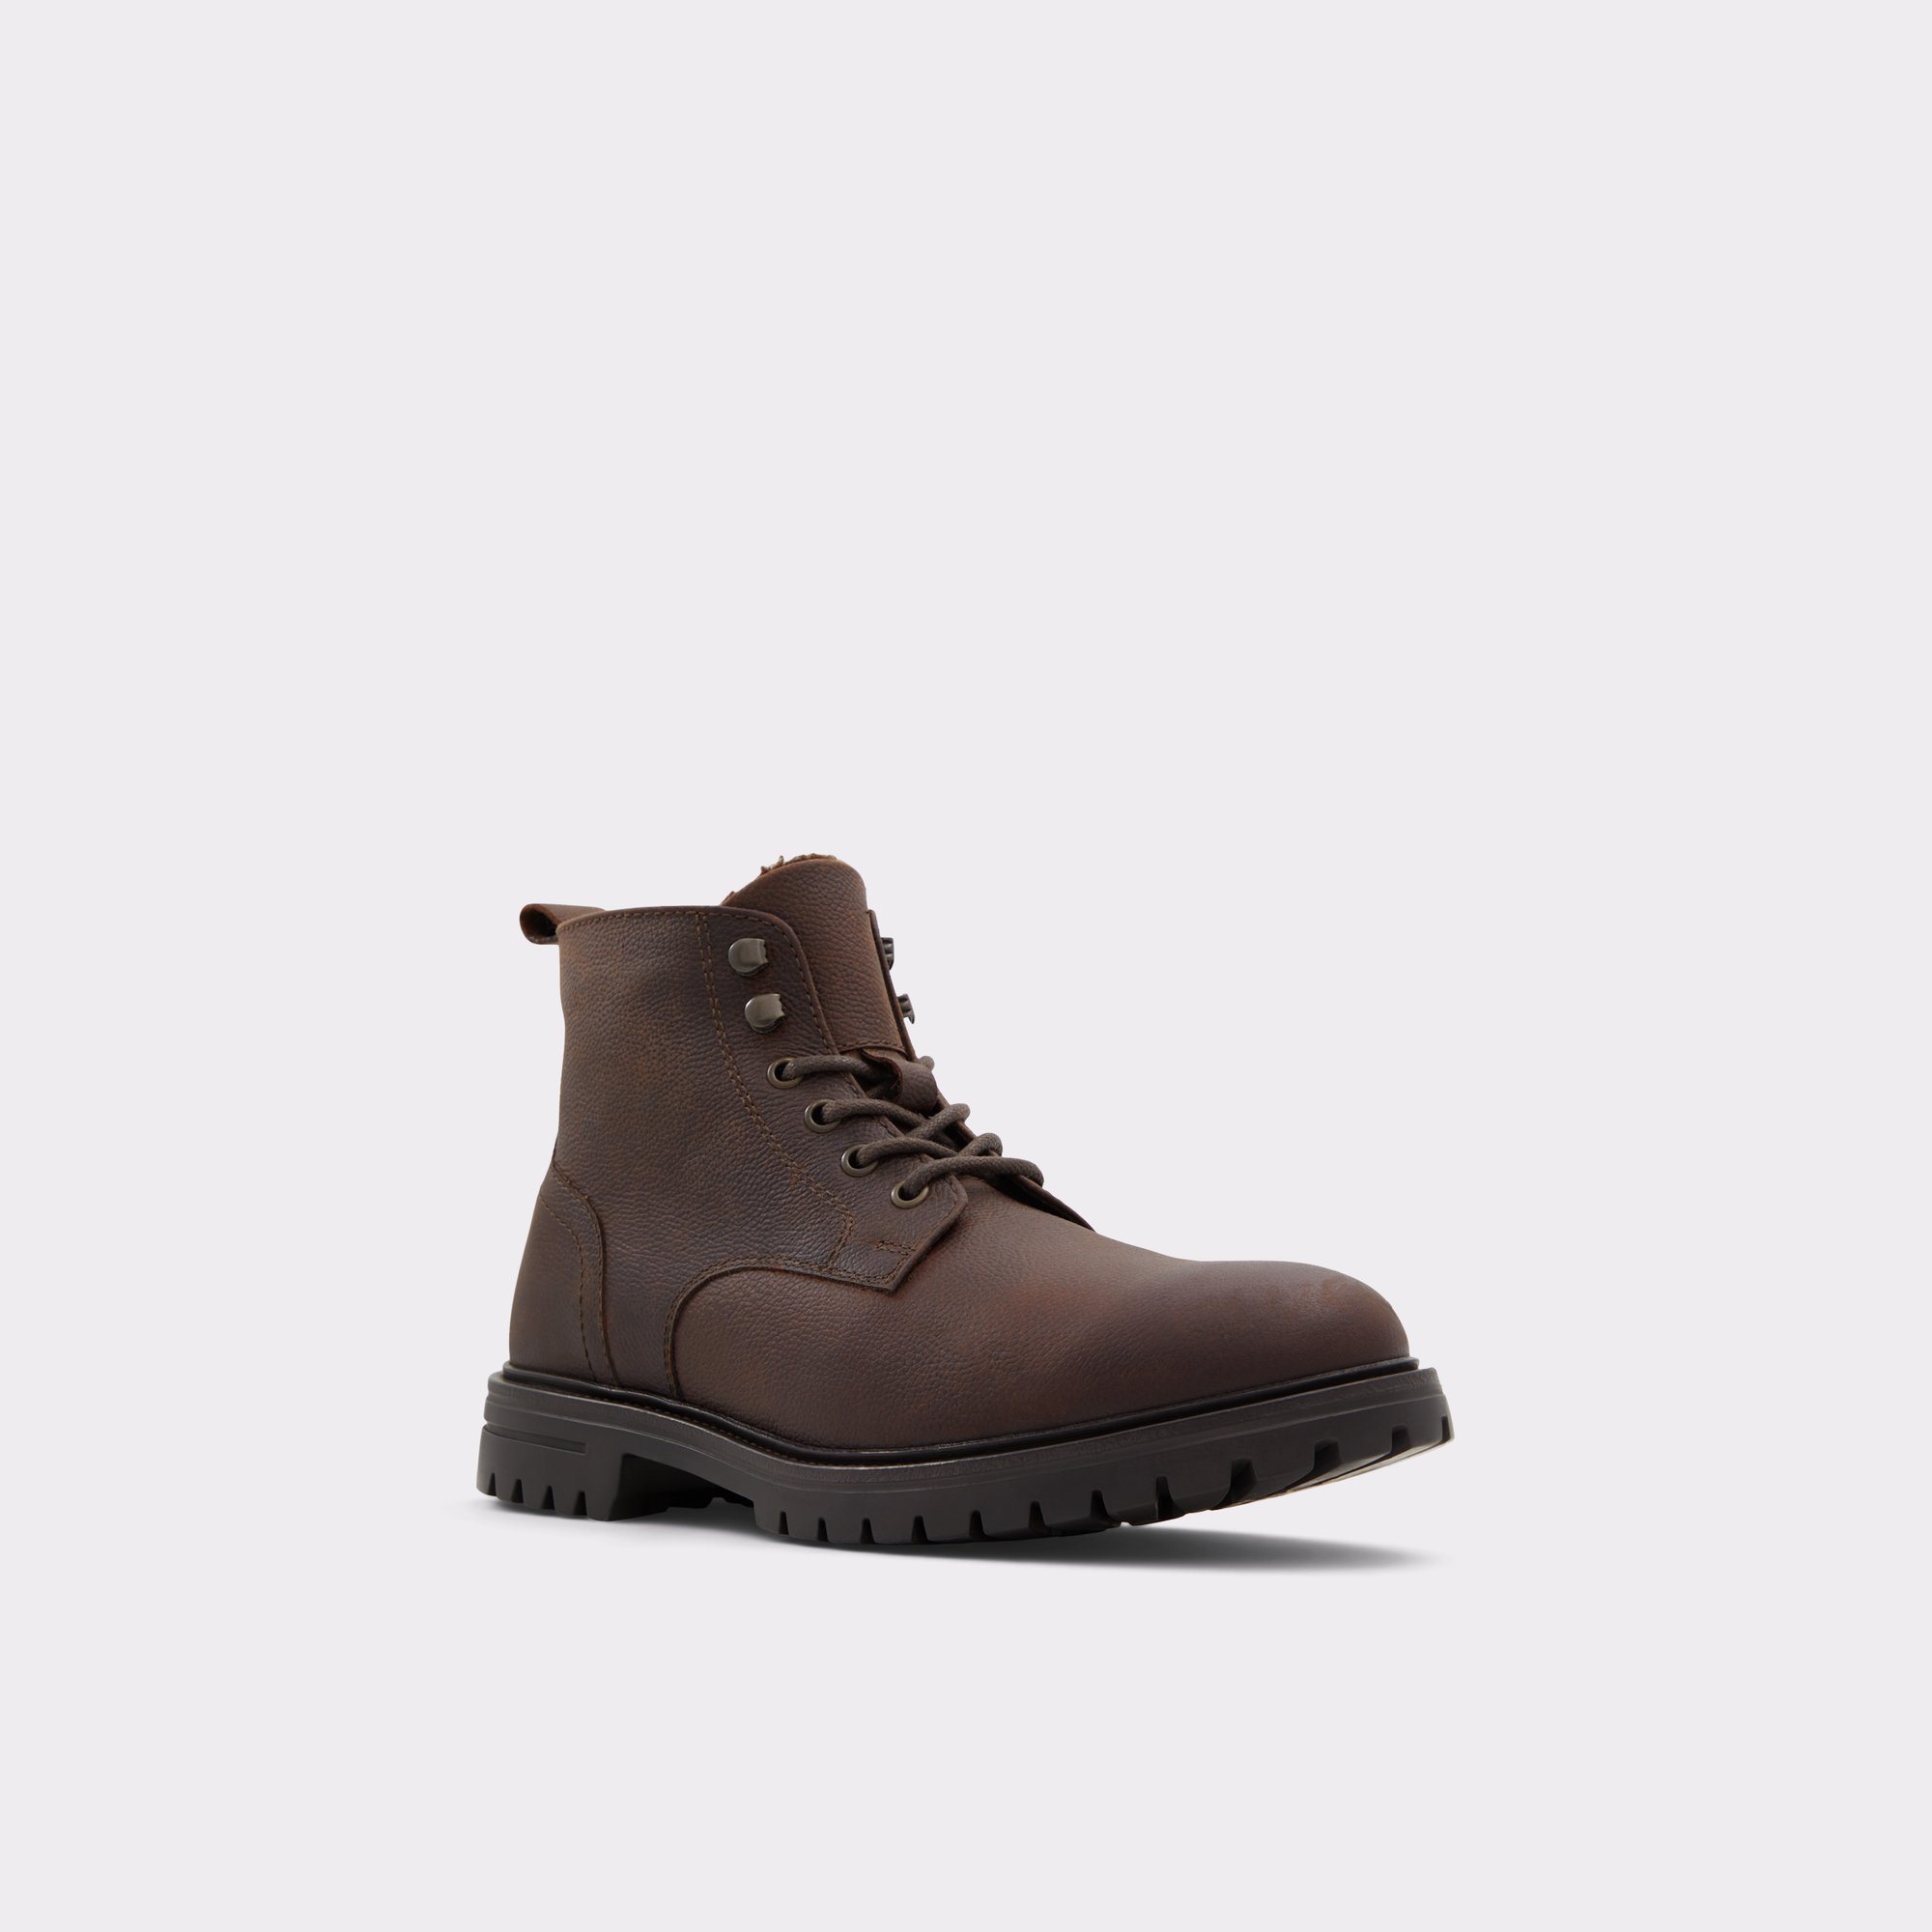 Laured-l Dark Brown Men's Lace-up boots | ALDO US